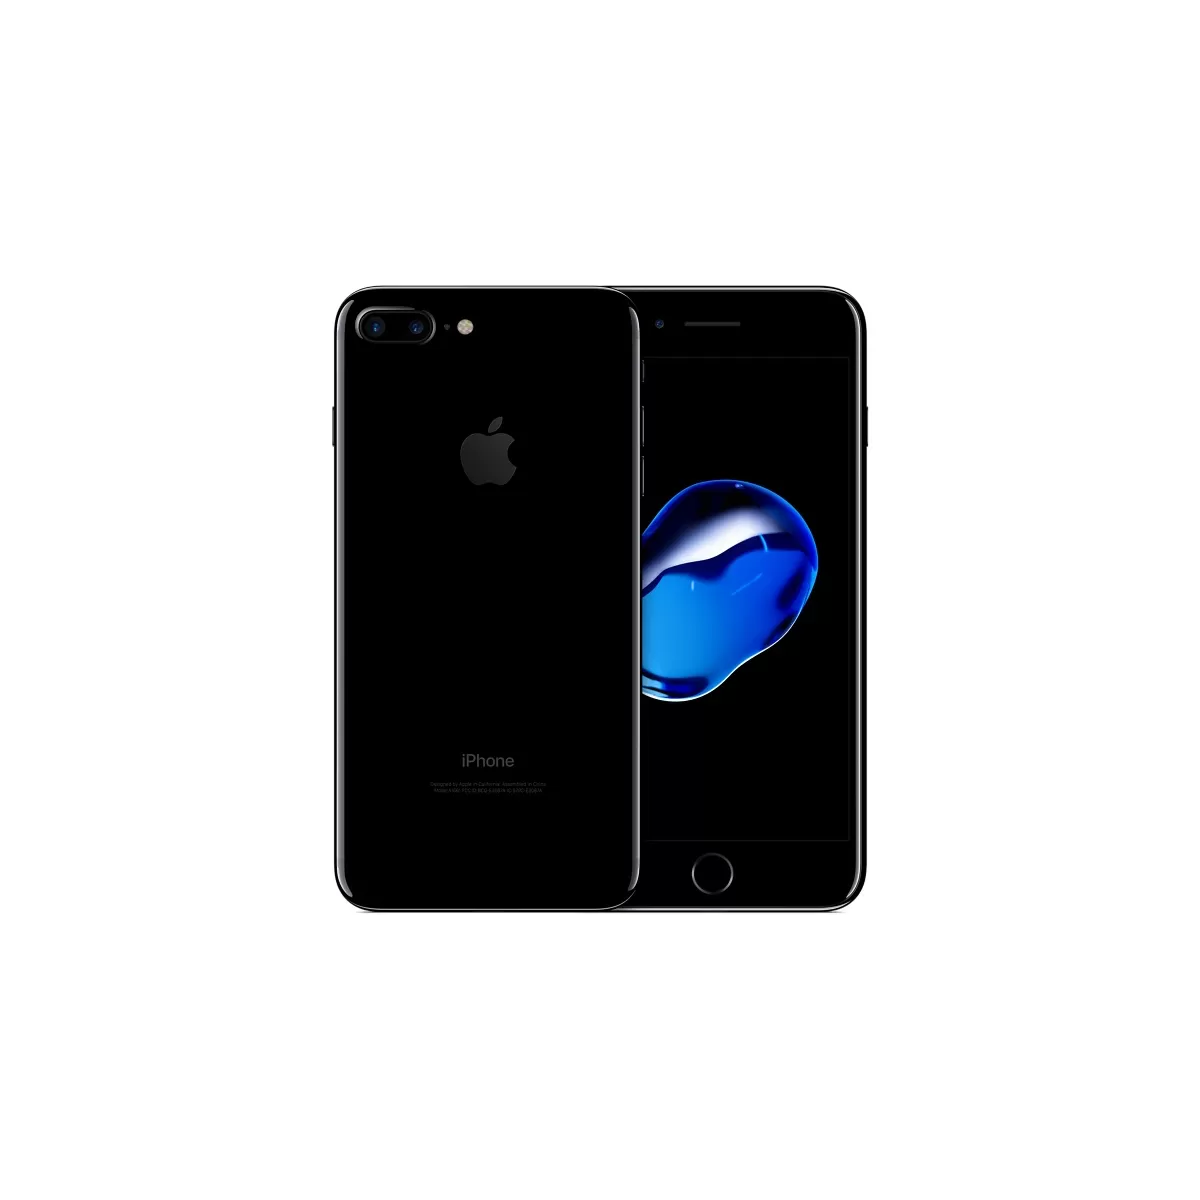 Смартфон Apple iPhone 7 Plus 128GB Jet Black